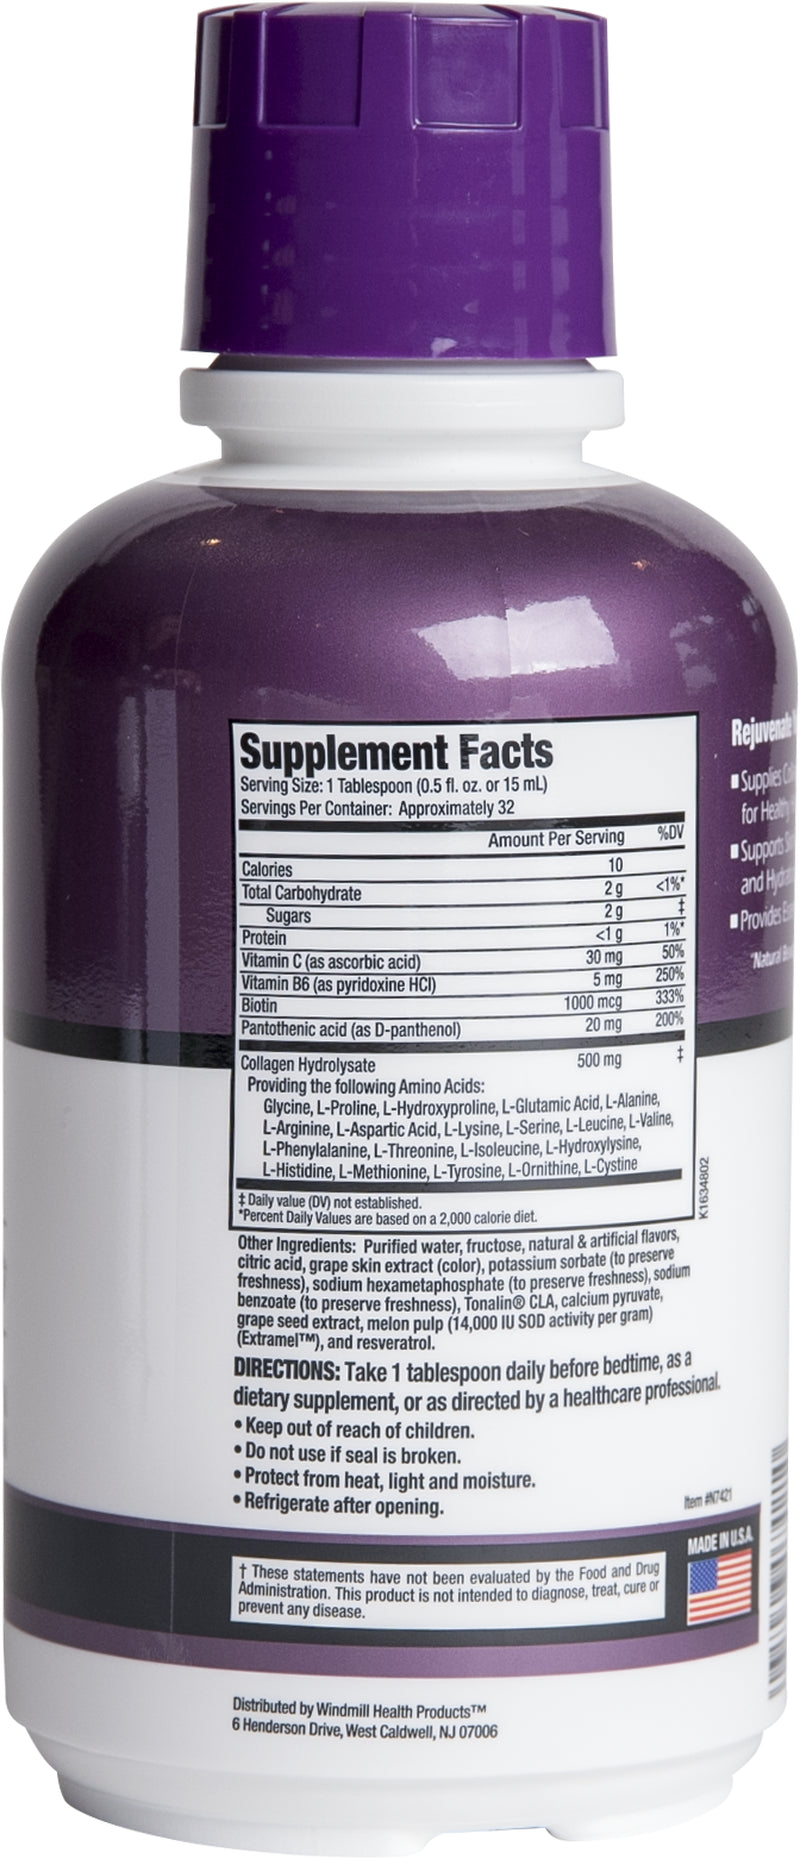 Rejuvicare Liquid Collagen Beauty Formula with Amino Acids, Protein and Biotin, Delicious Grape Flavor, 32 Servings